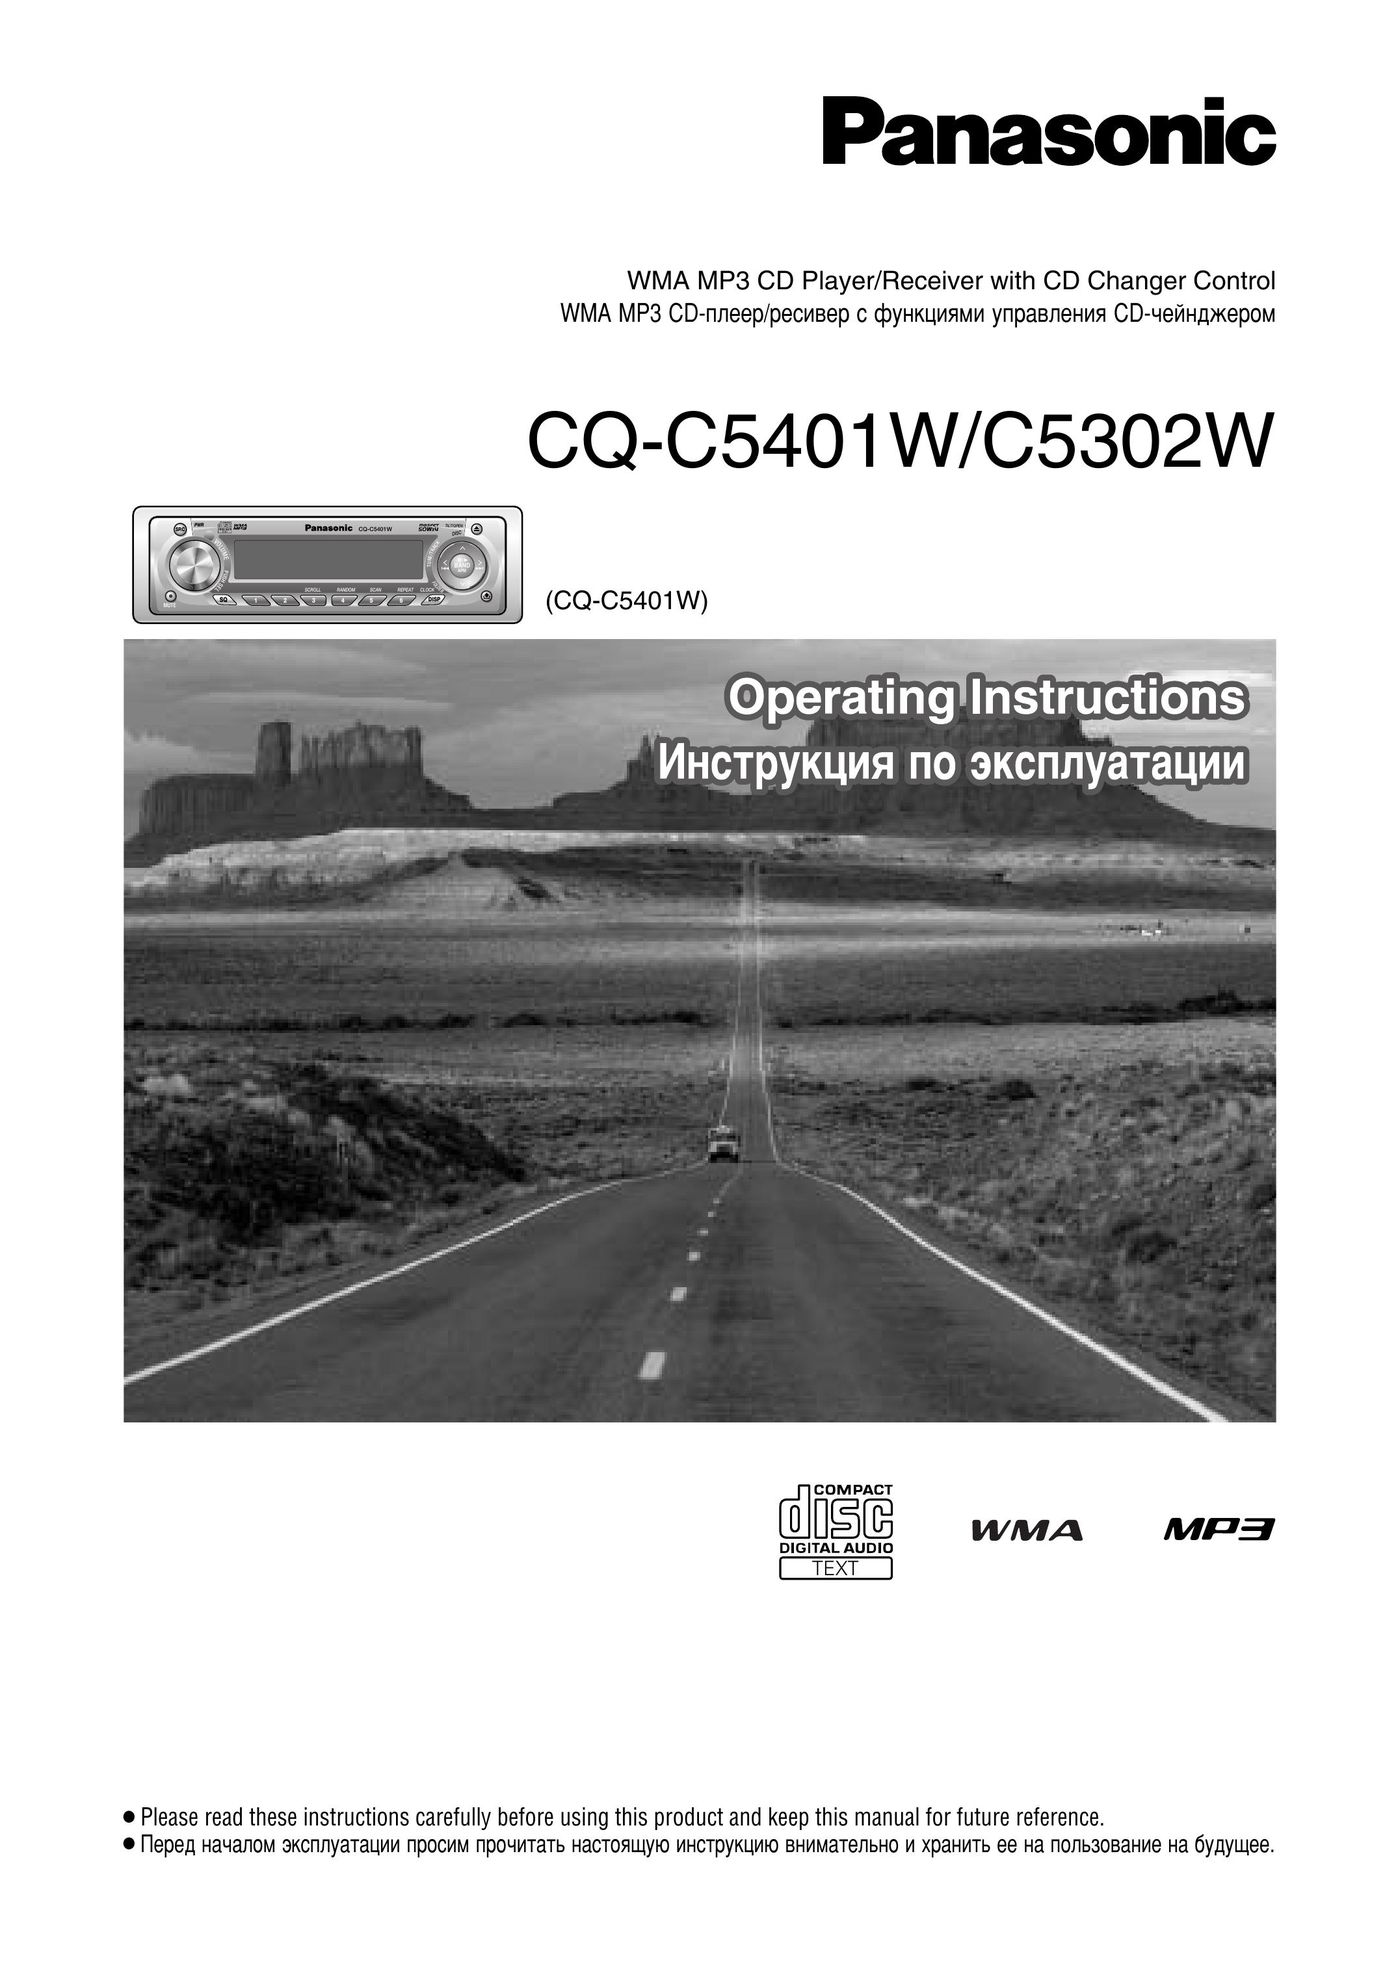 Panasonic CQ-C5302W MP3 Player User Manual